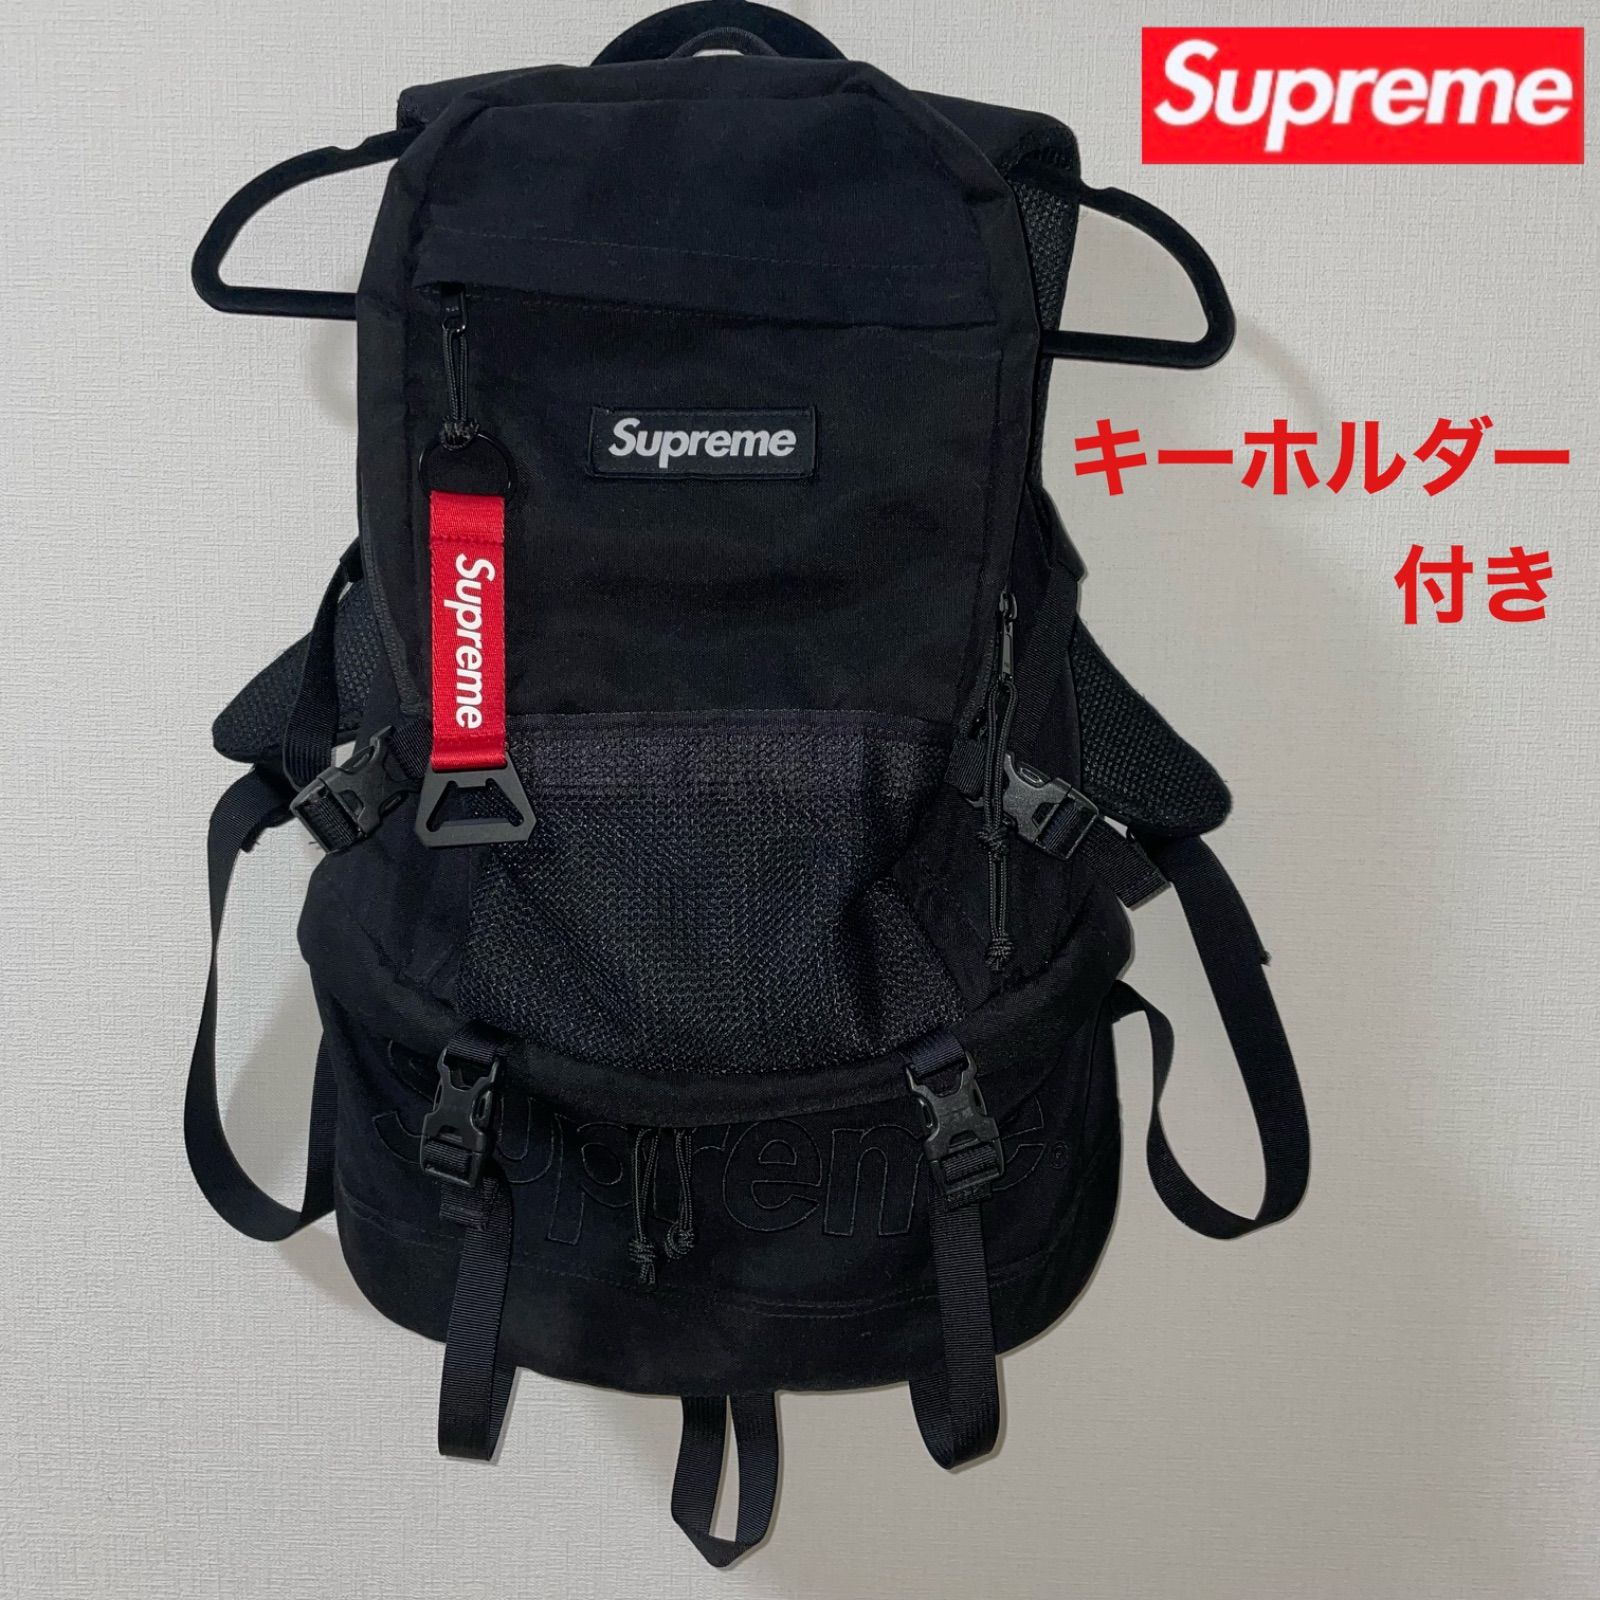 Supreme backpack 15aw black バックパック-